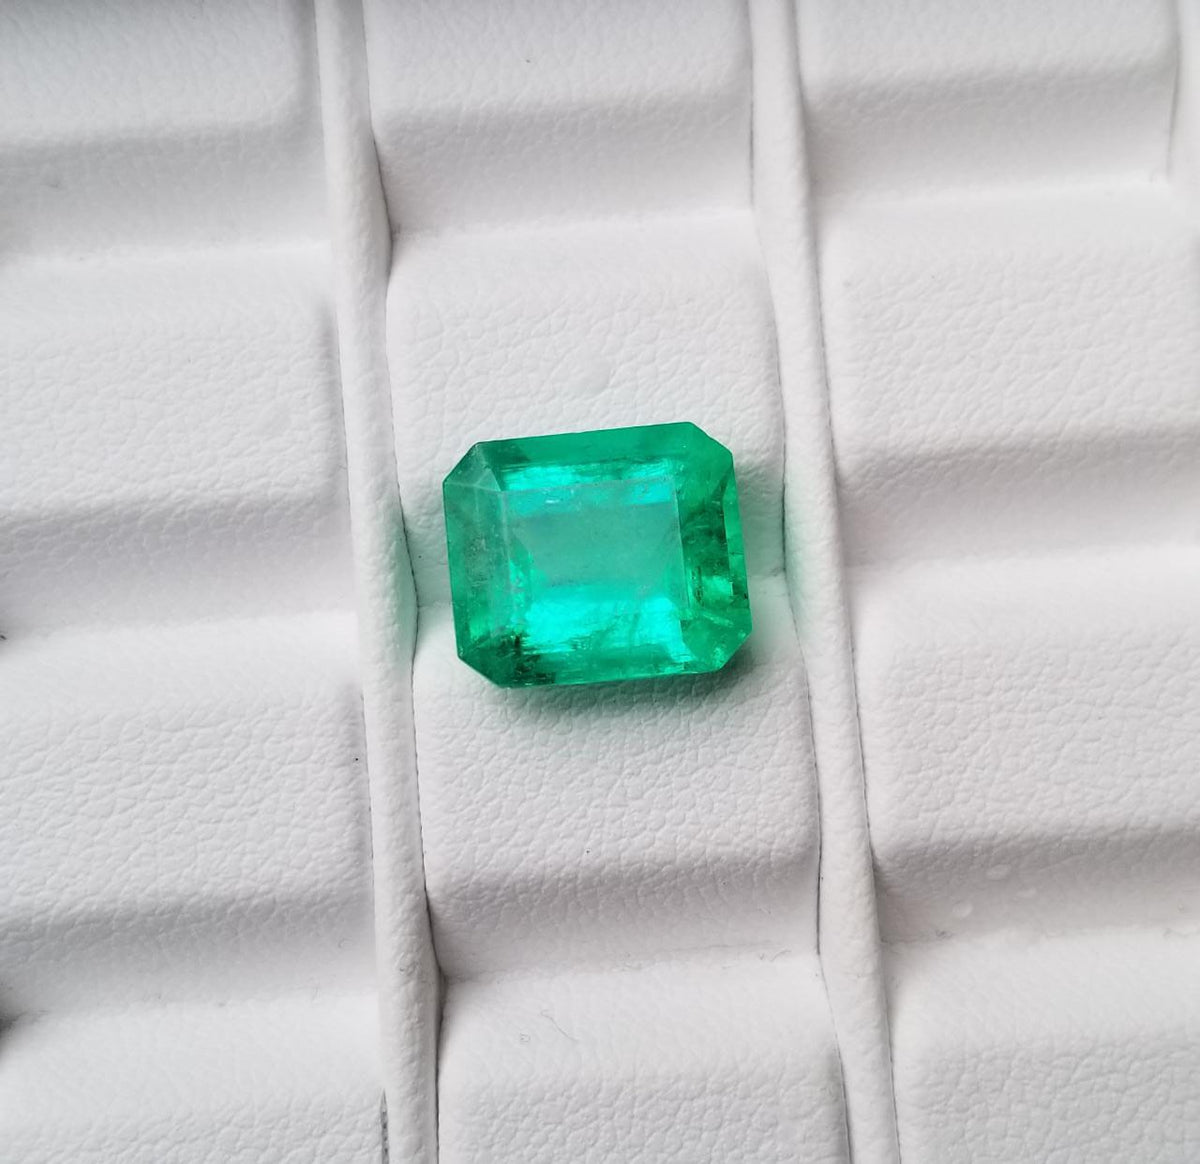 Beautiful Classic Octagonal cut Emerald from Panjshir